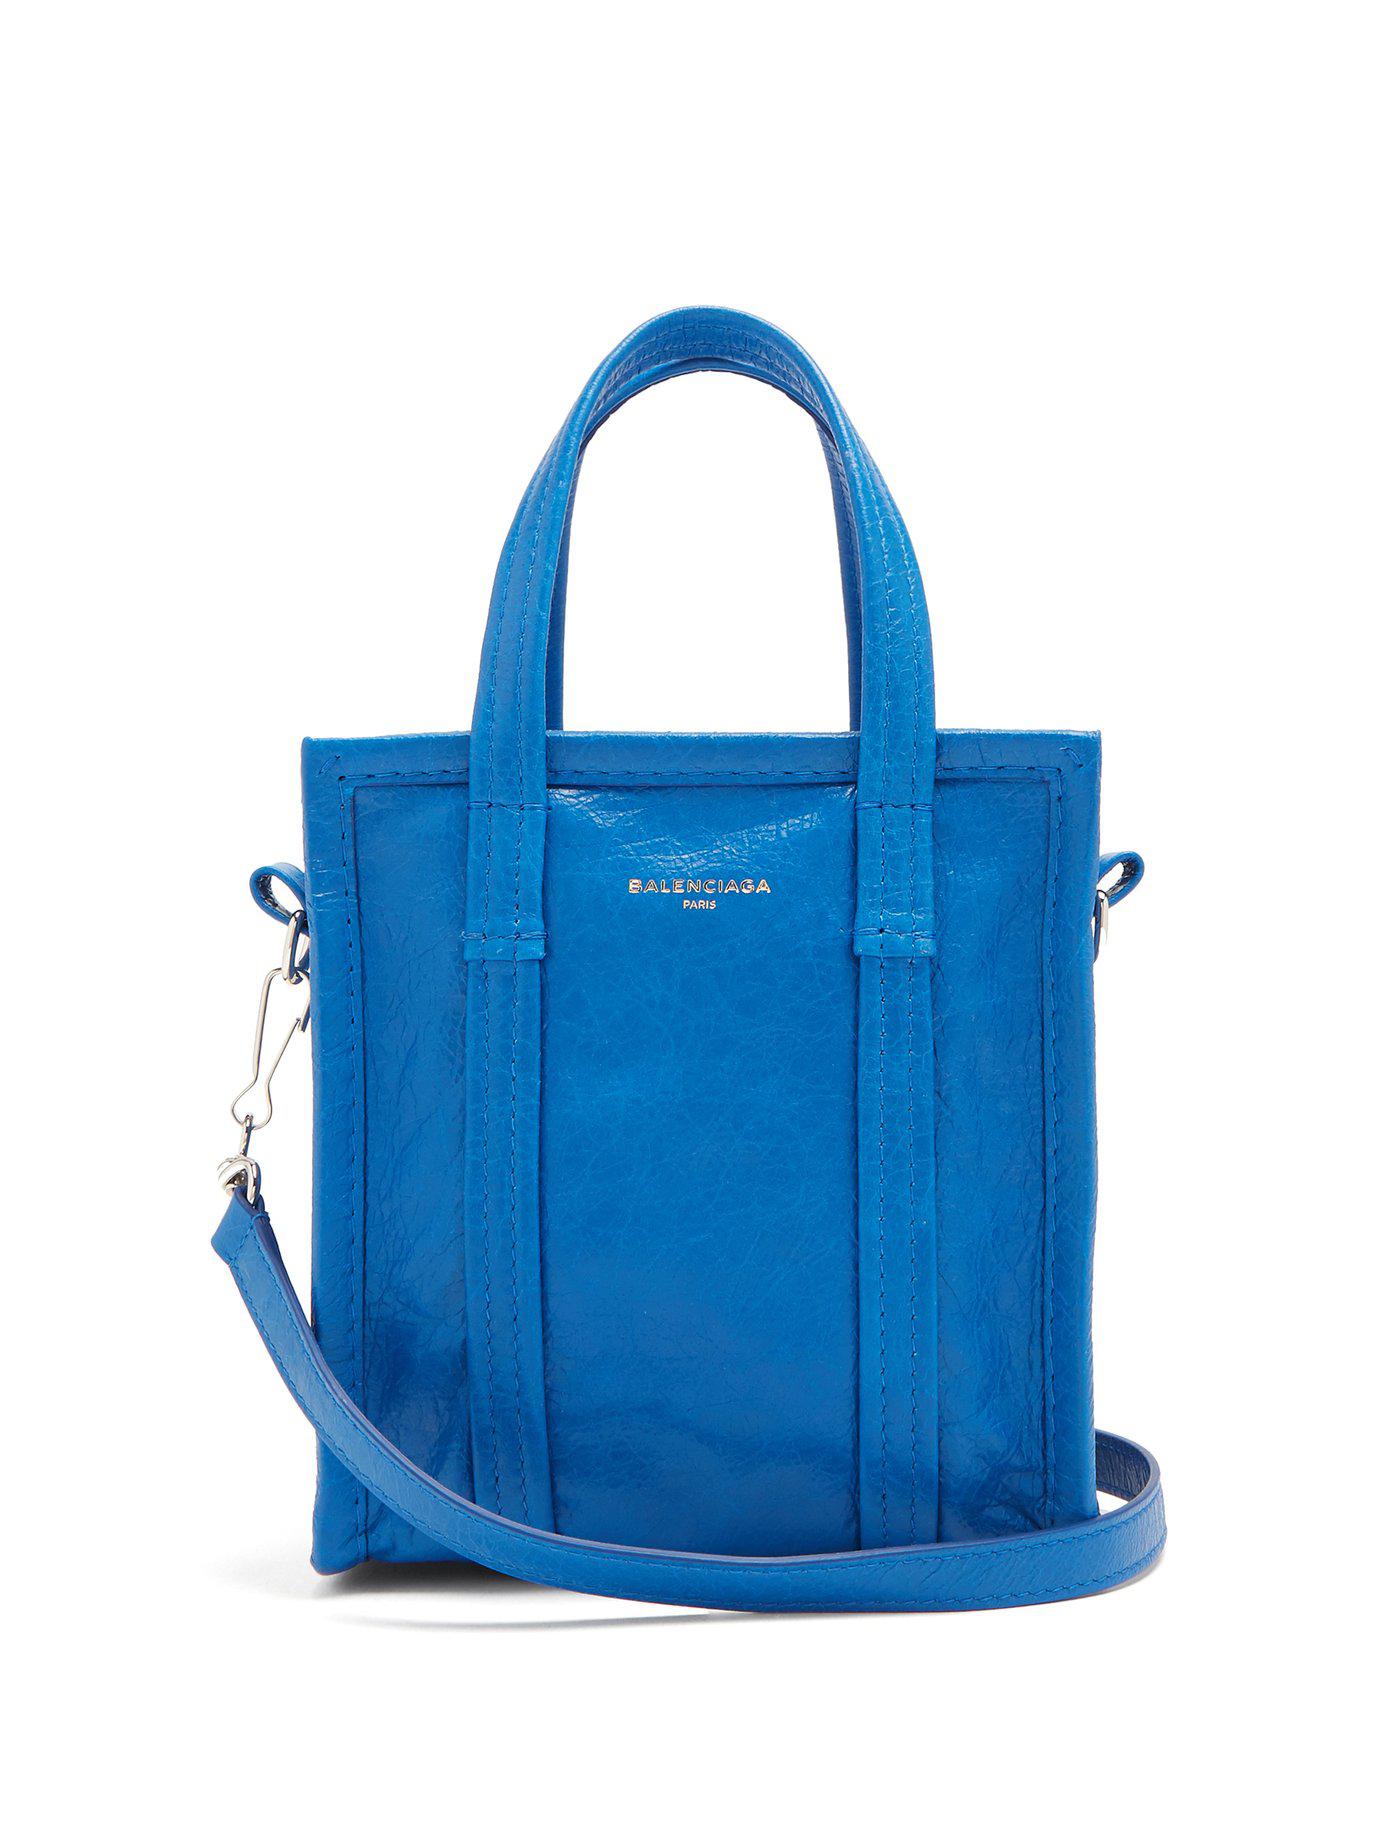 BALENCIAGA Bazar Shopper S-Size 2-way Tote Bag Shoulder Bag Black Blue White